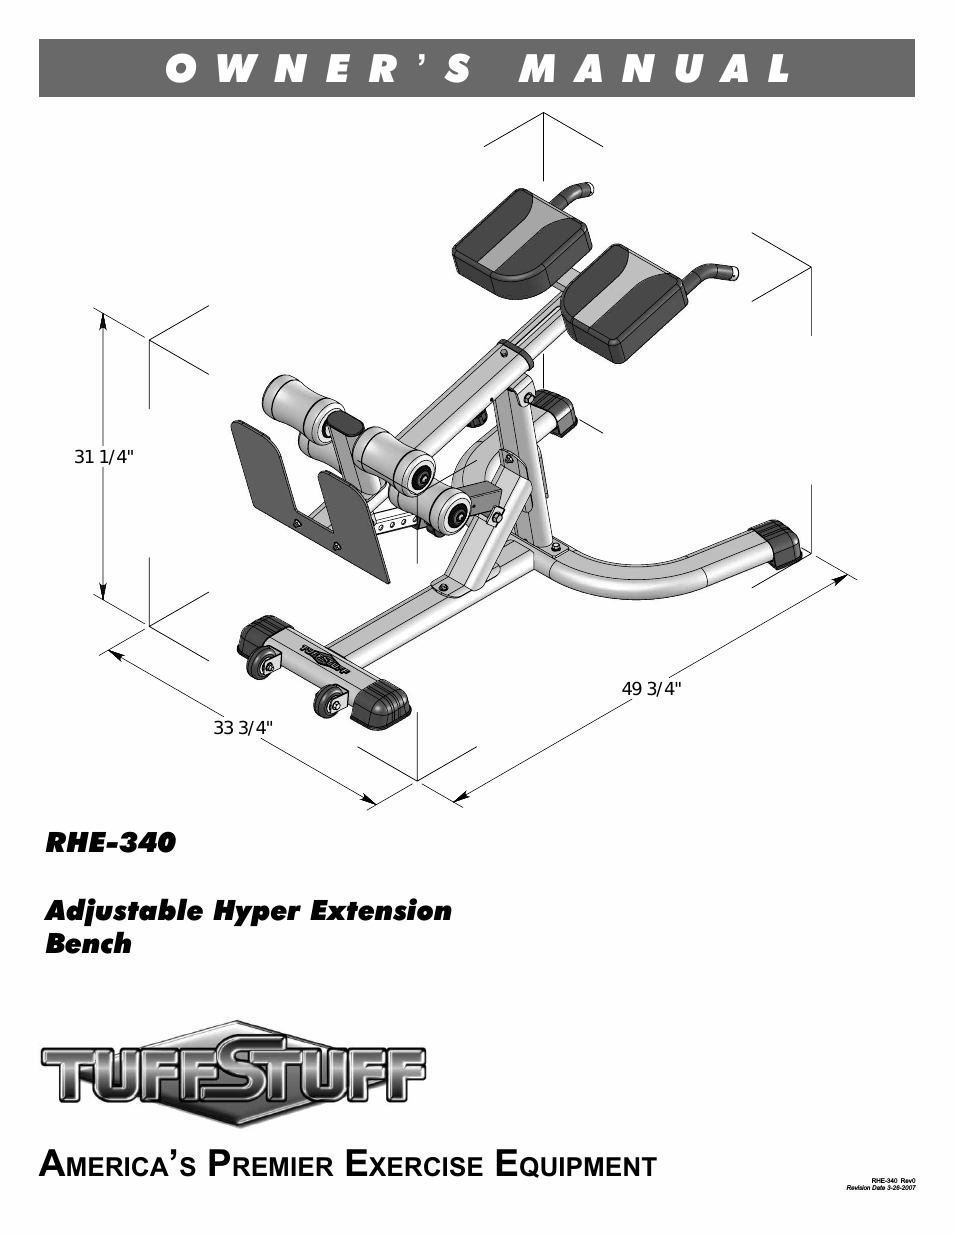 RHE-340 Adjustable Hyper Extension Bench